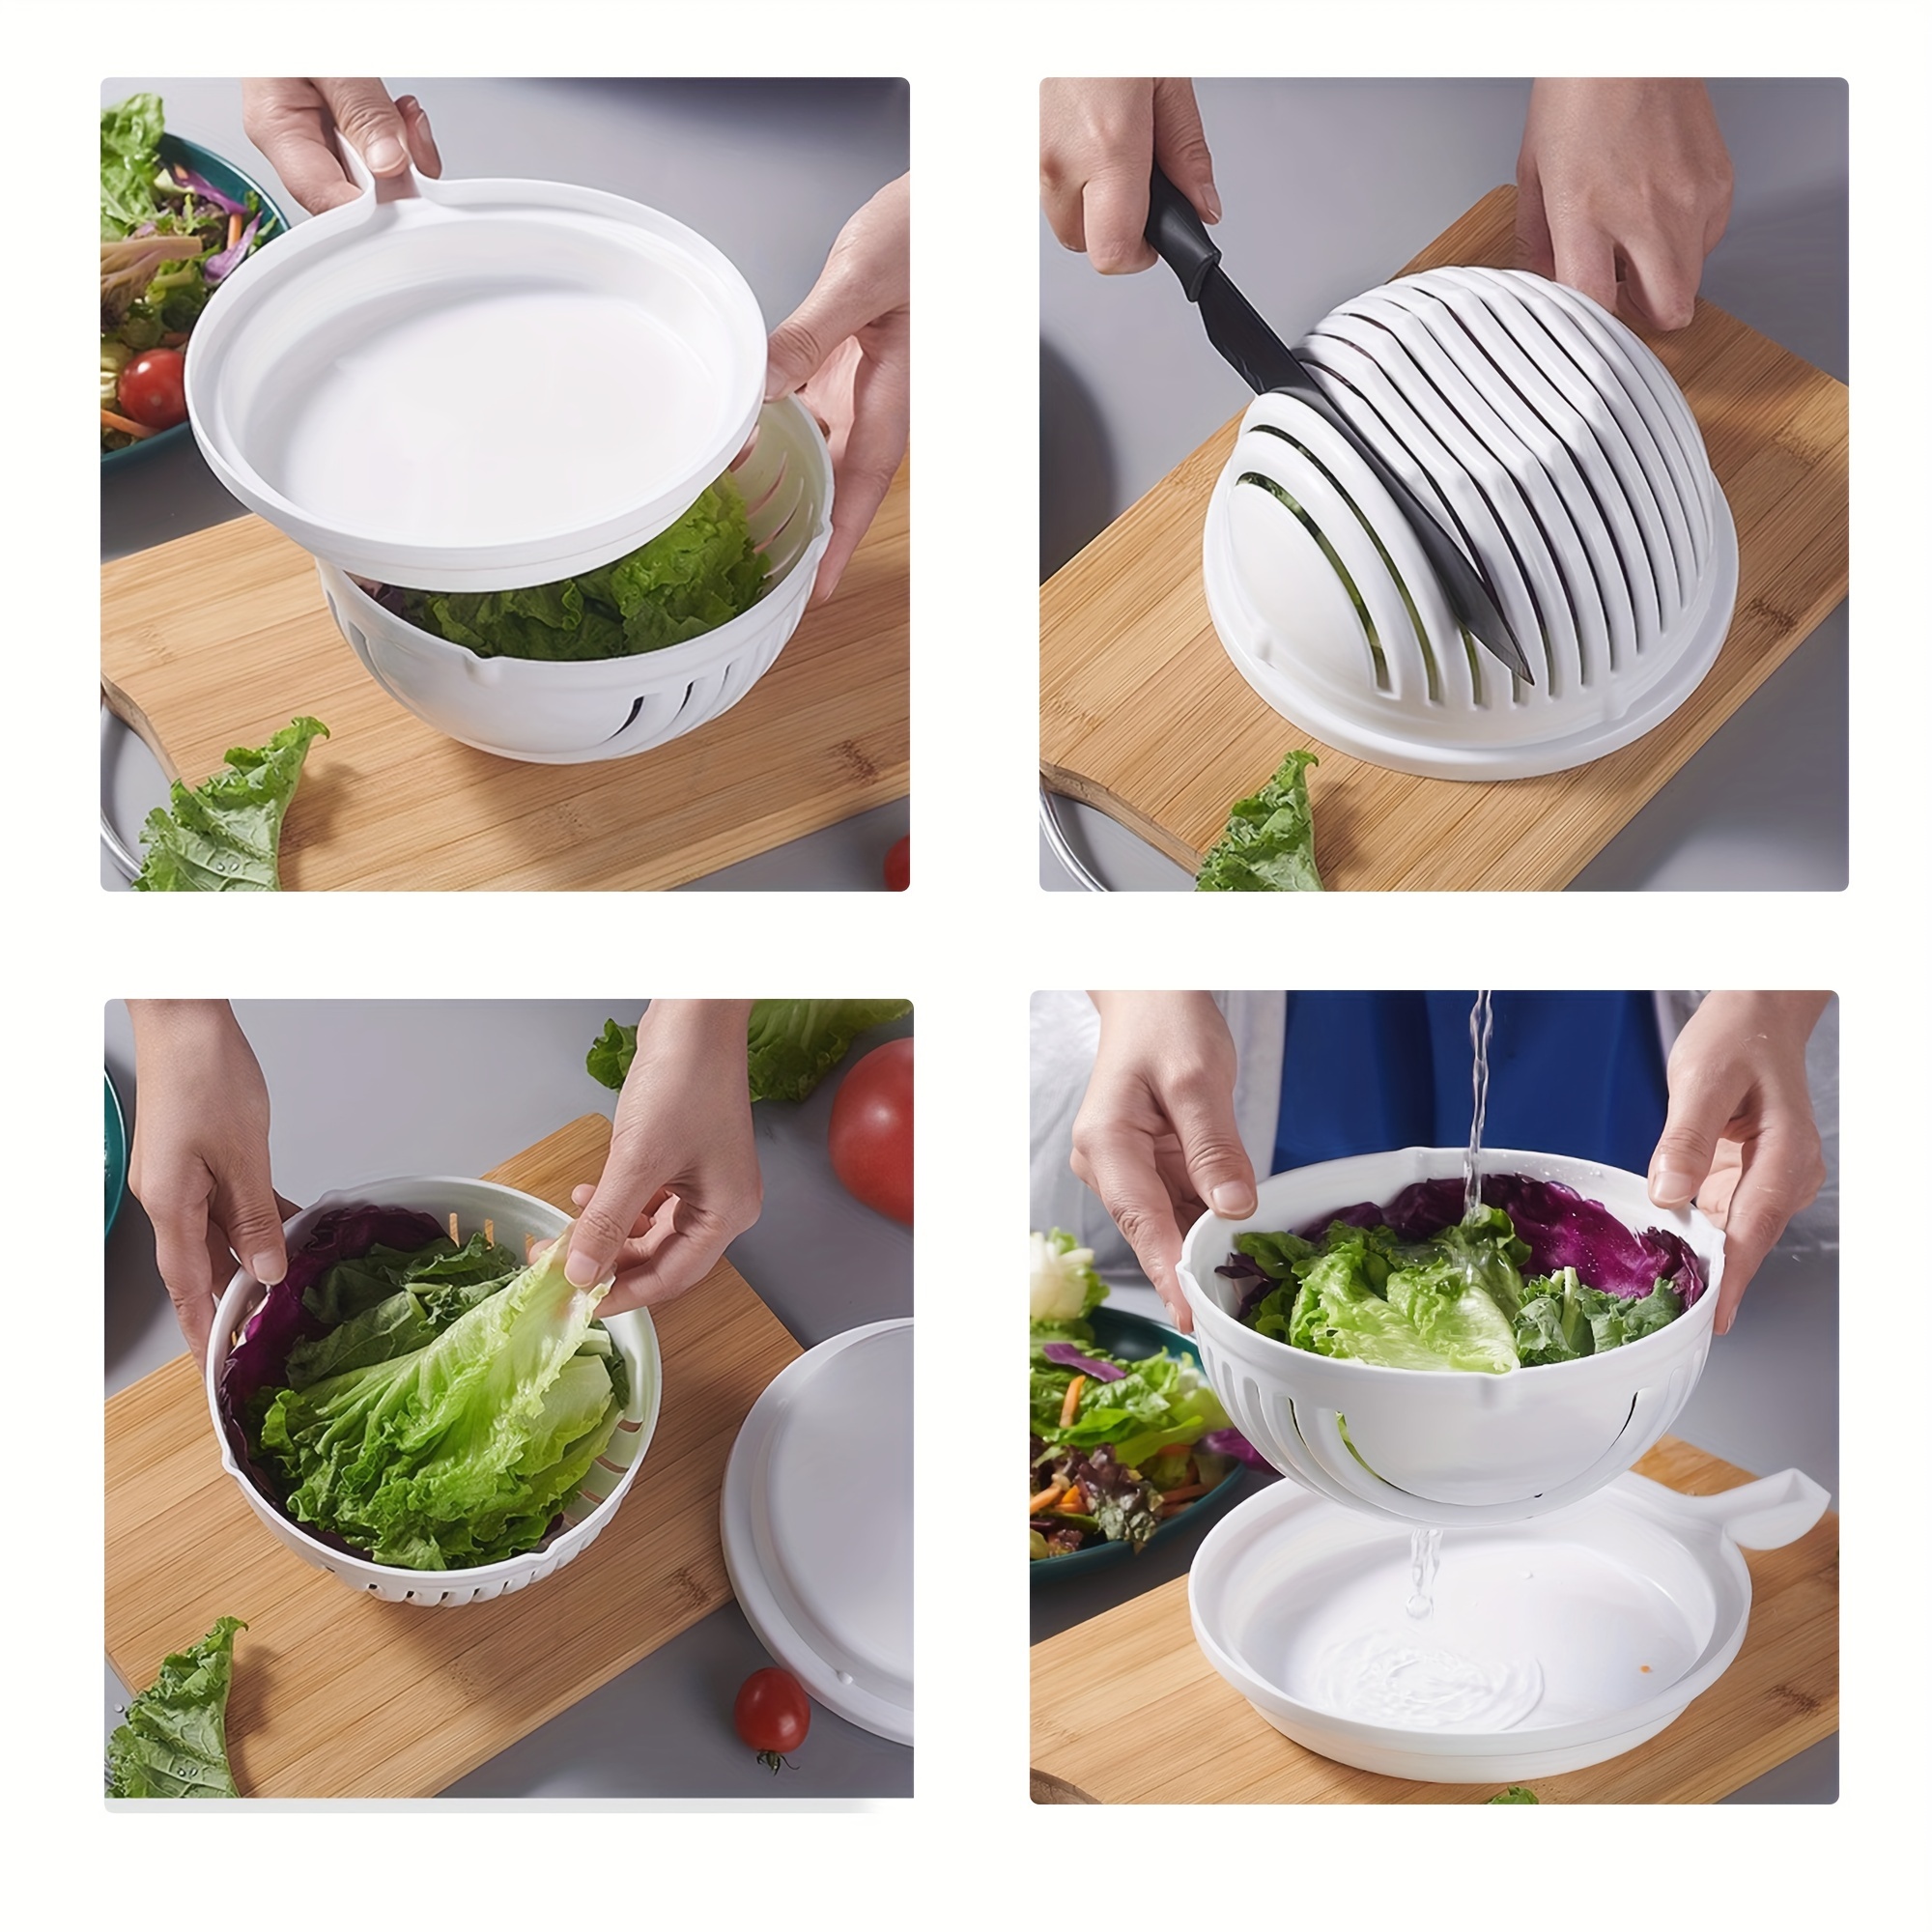 Salad Cutter Bowl